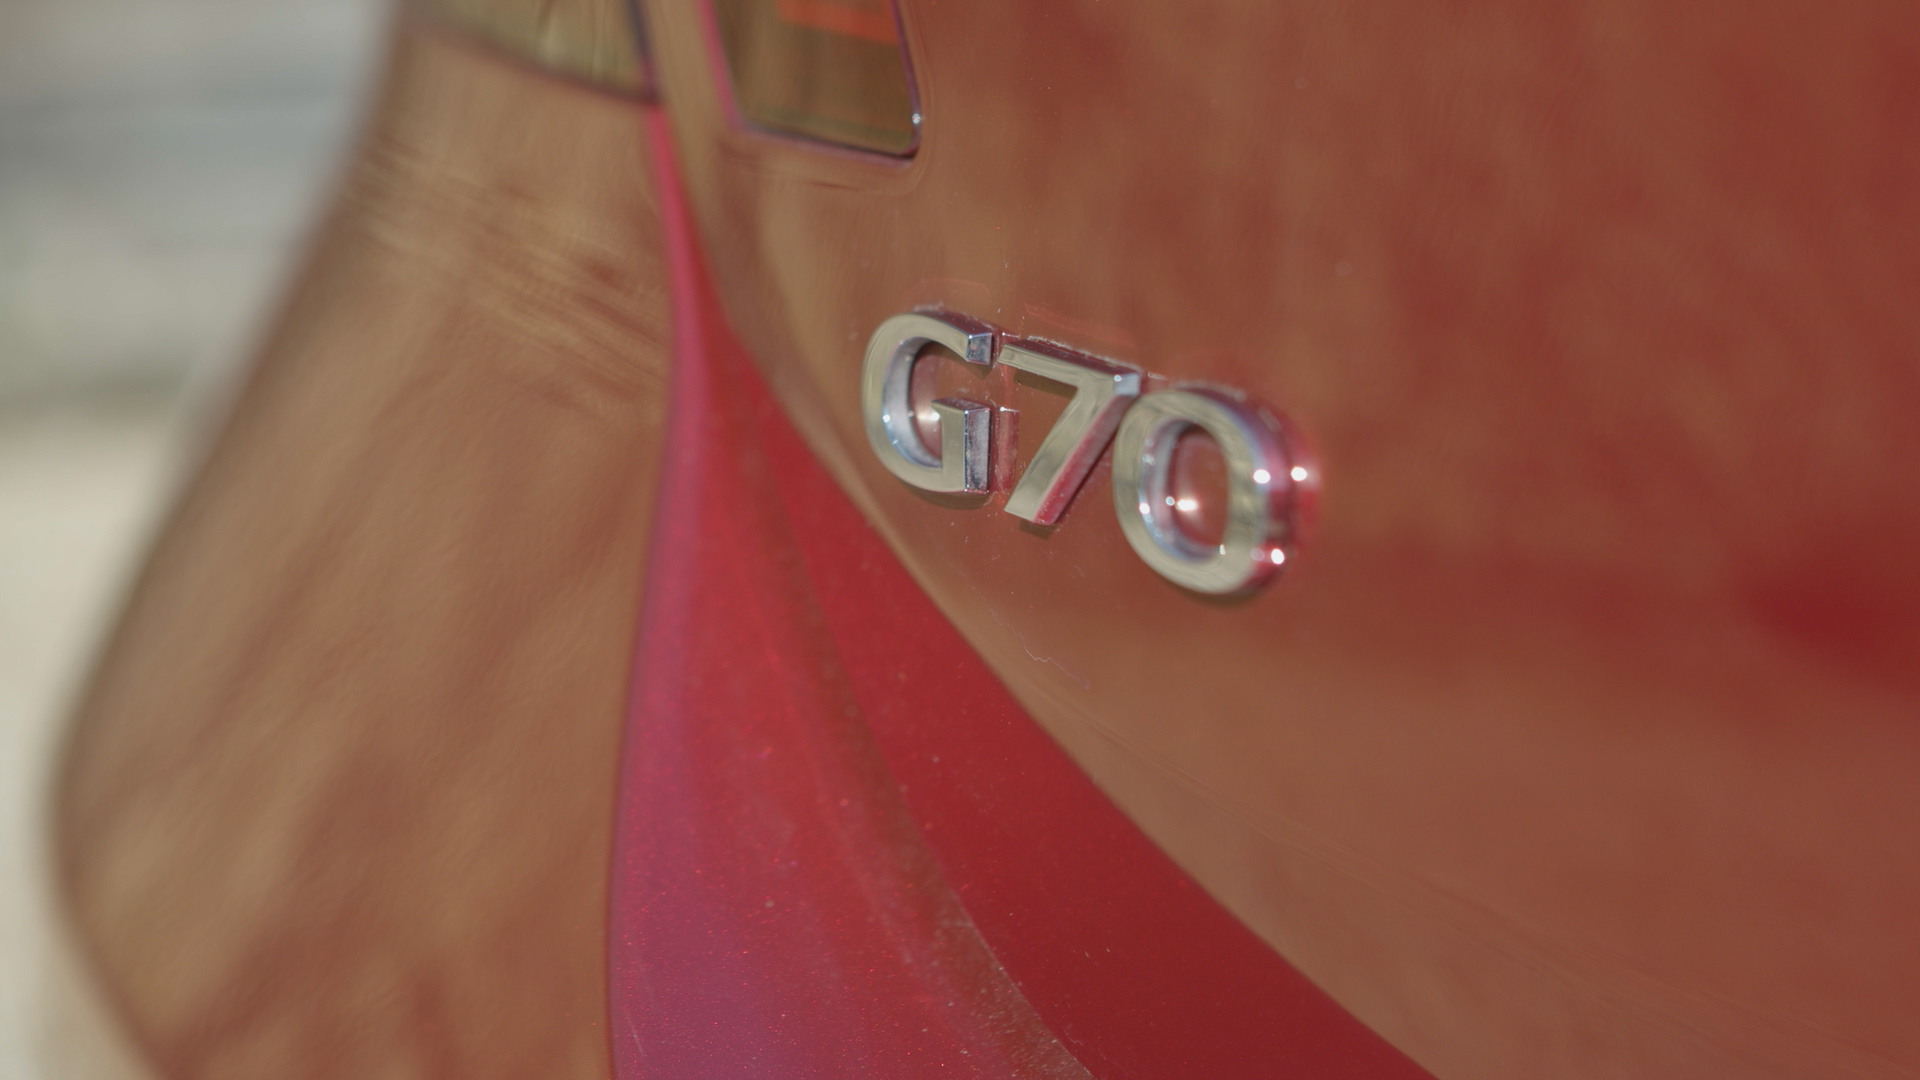 GENESIS G70 SHOOTING BRAKE 2.0T [245] Sport 5dr Auto